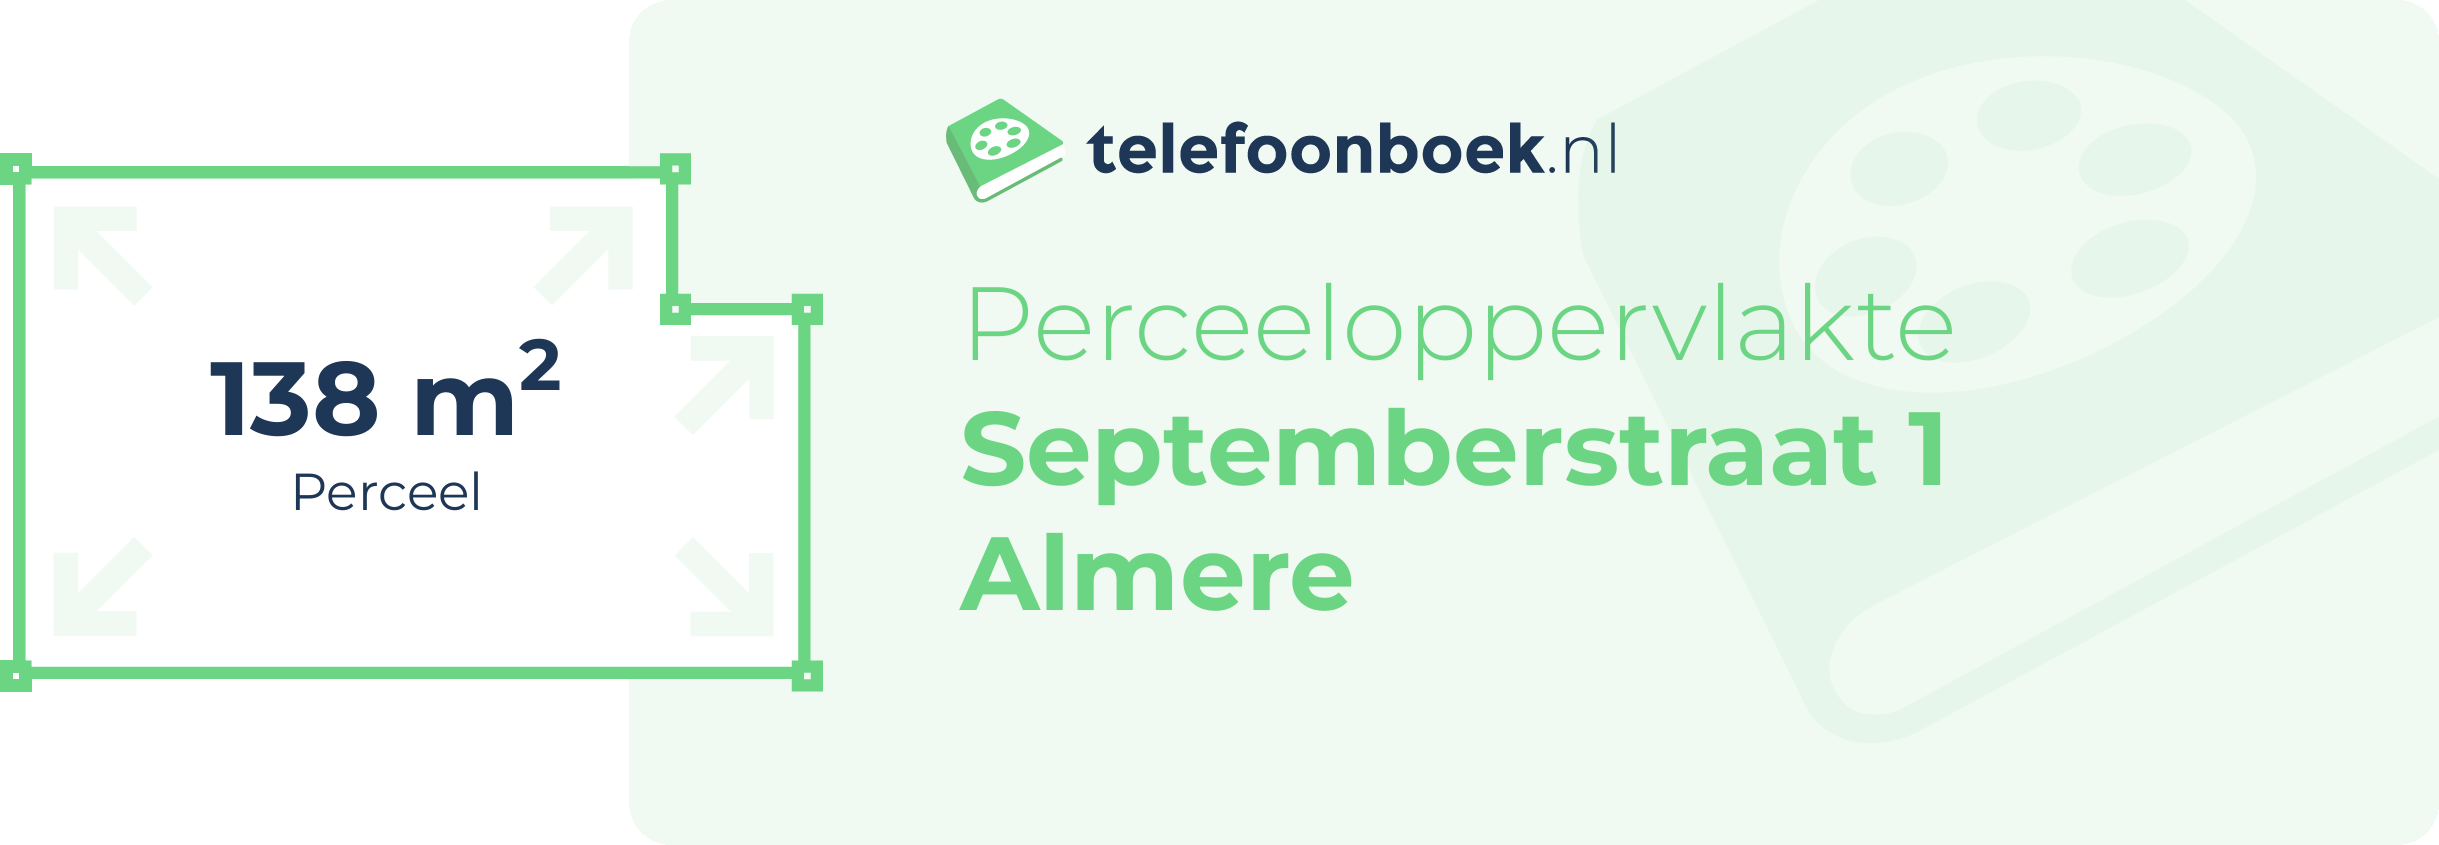 Perceeloppervlakte Septemberstraat 1 Almere